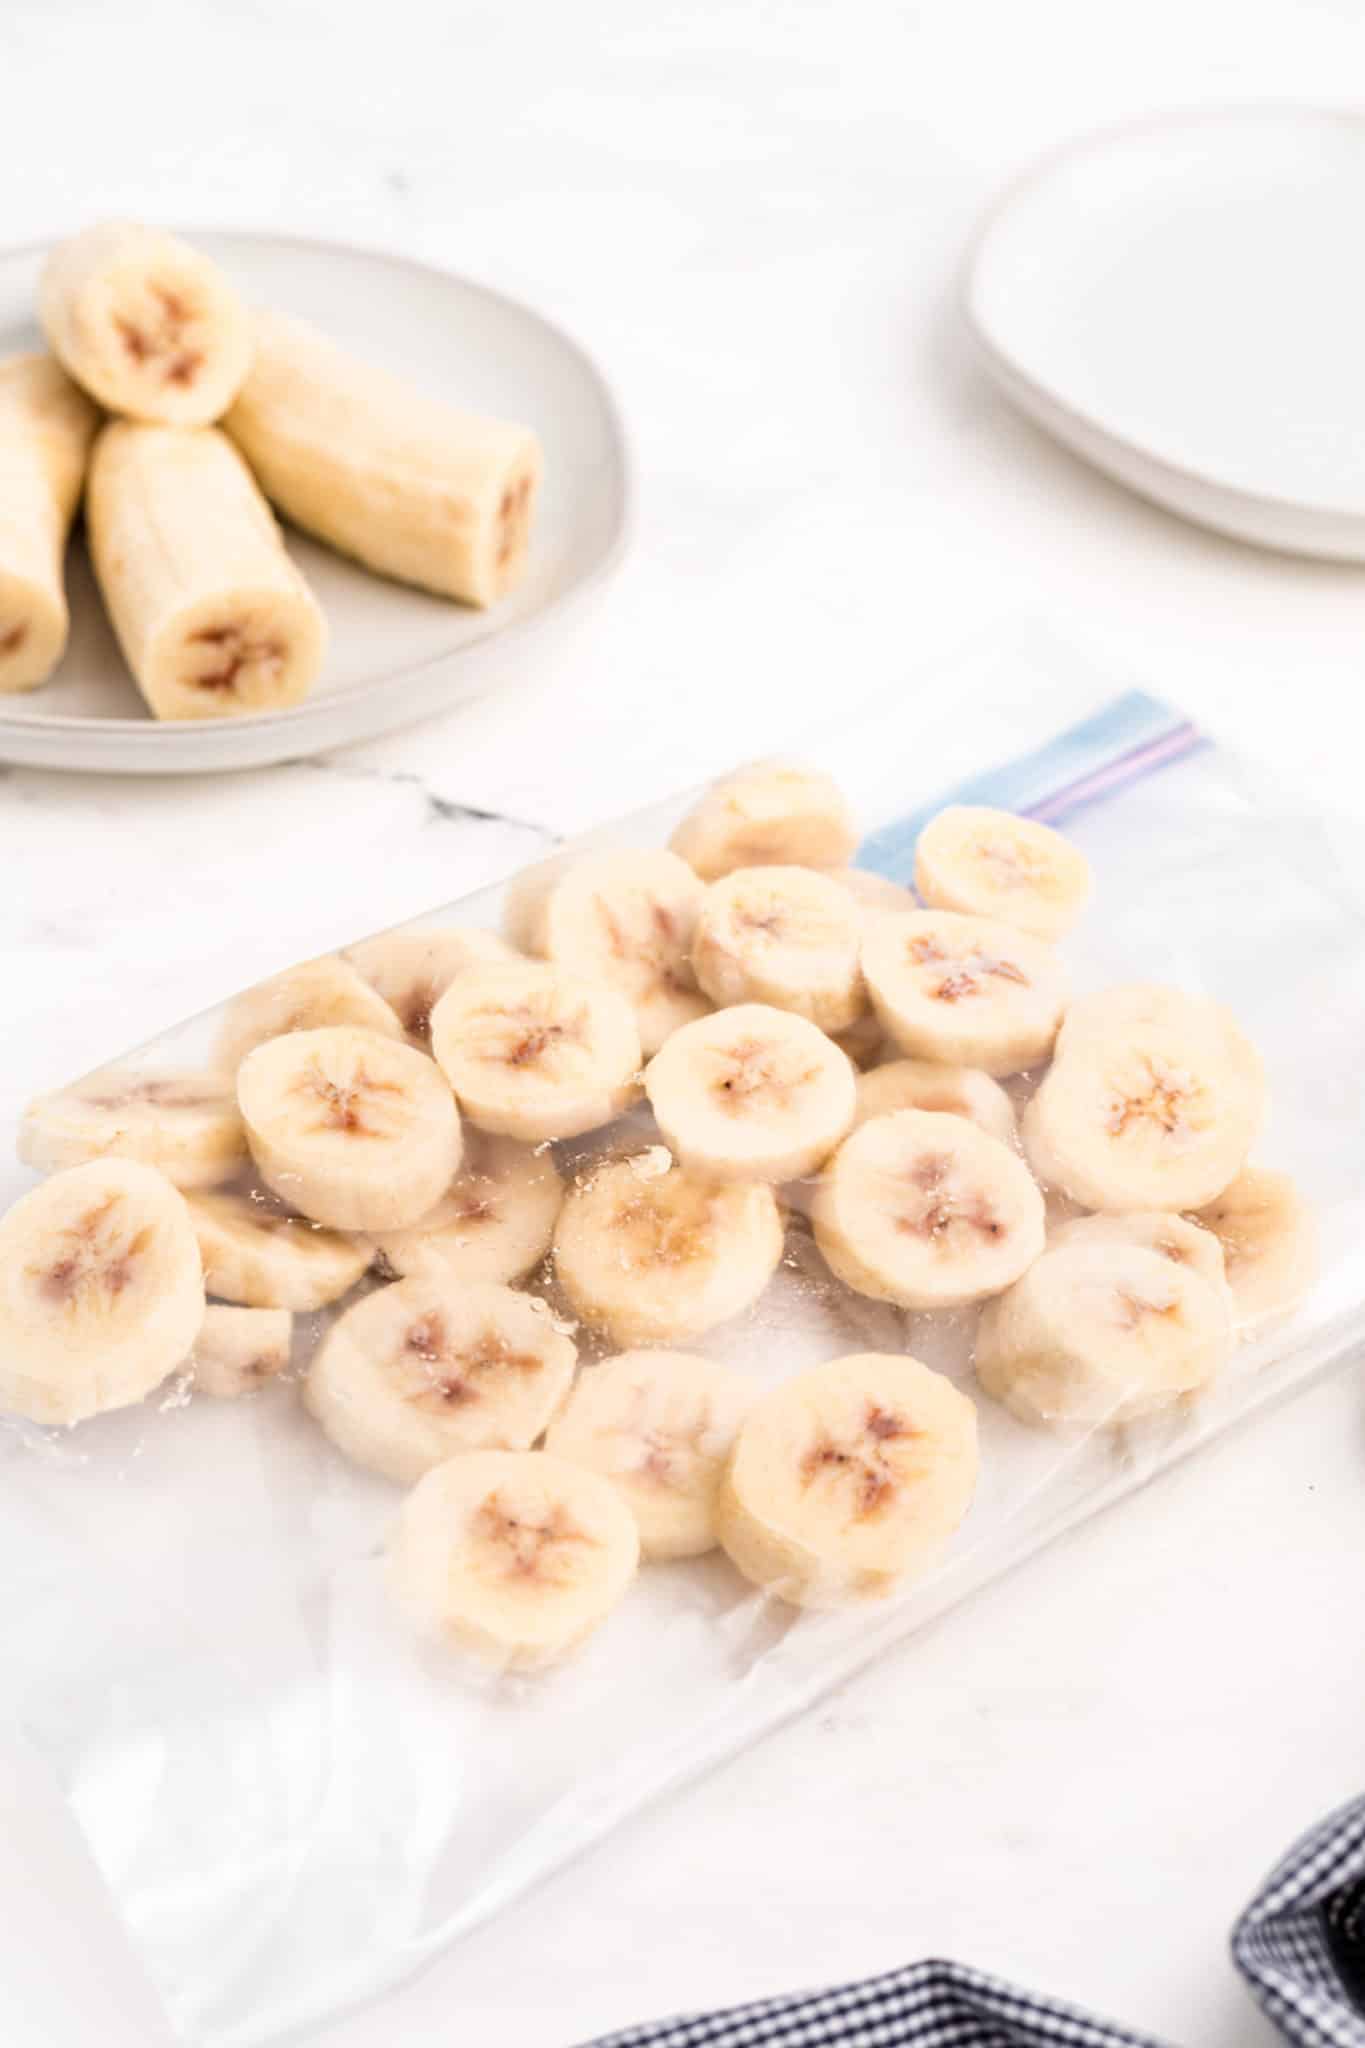 Frozen banana slices in a zipper top bag on a white counter.